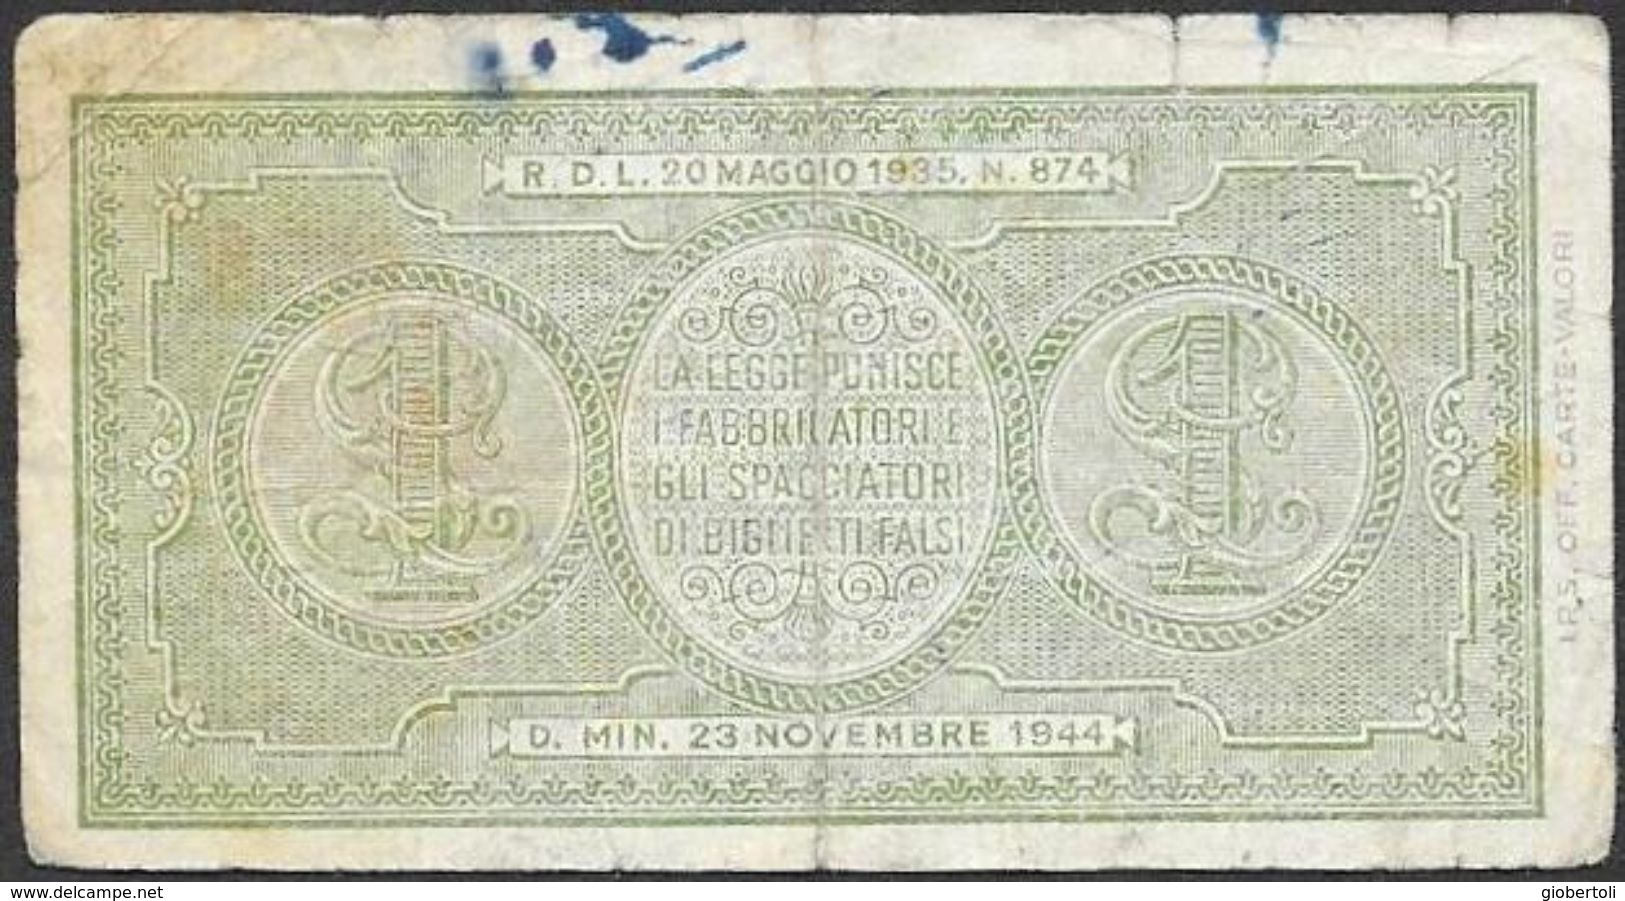 Italia/Italy/Italie: 1944, 1 Lira - Italia – 1 Lira